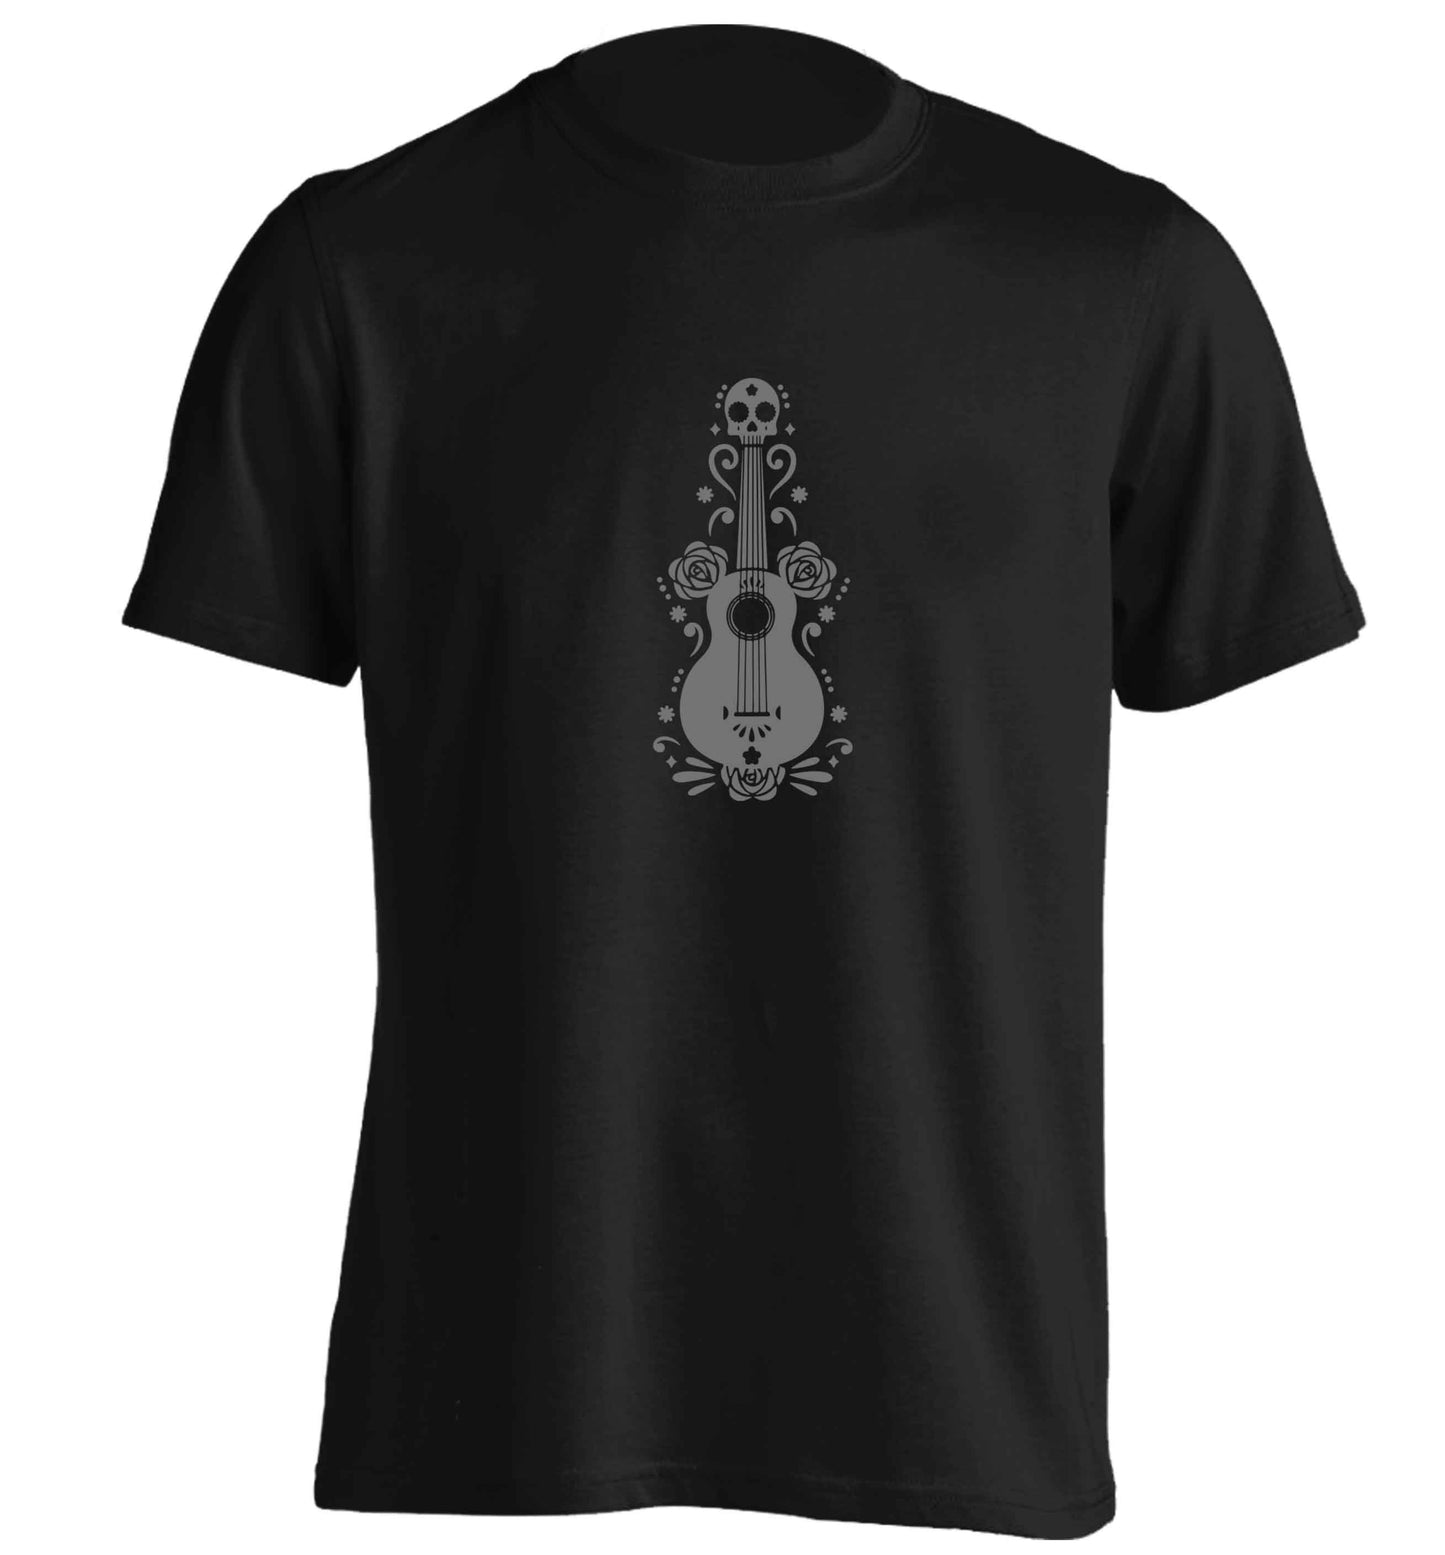 Guitar skull illustration adults unisex black Tshirt 2XL